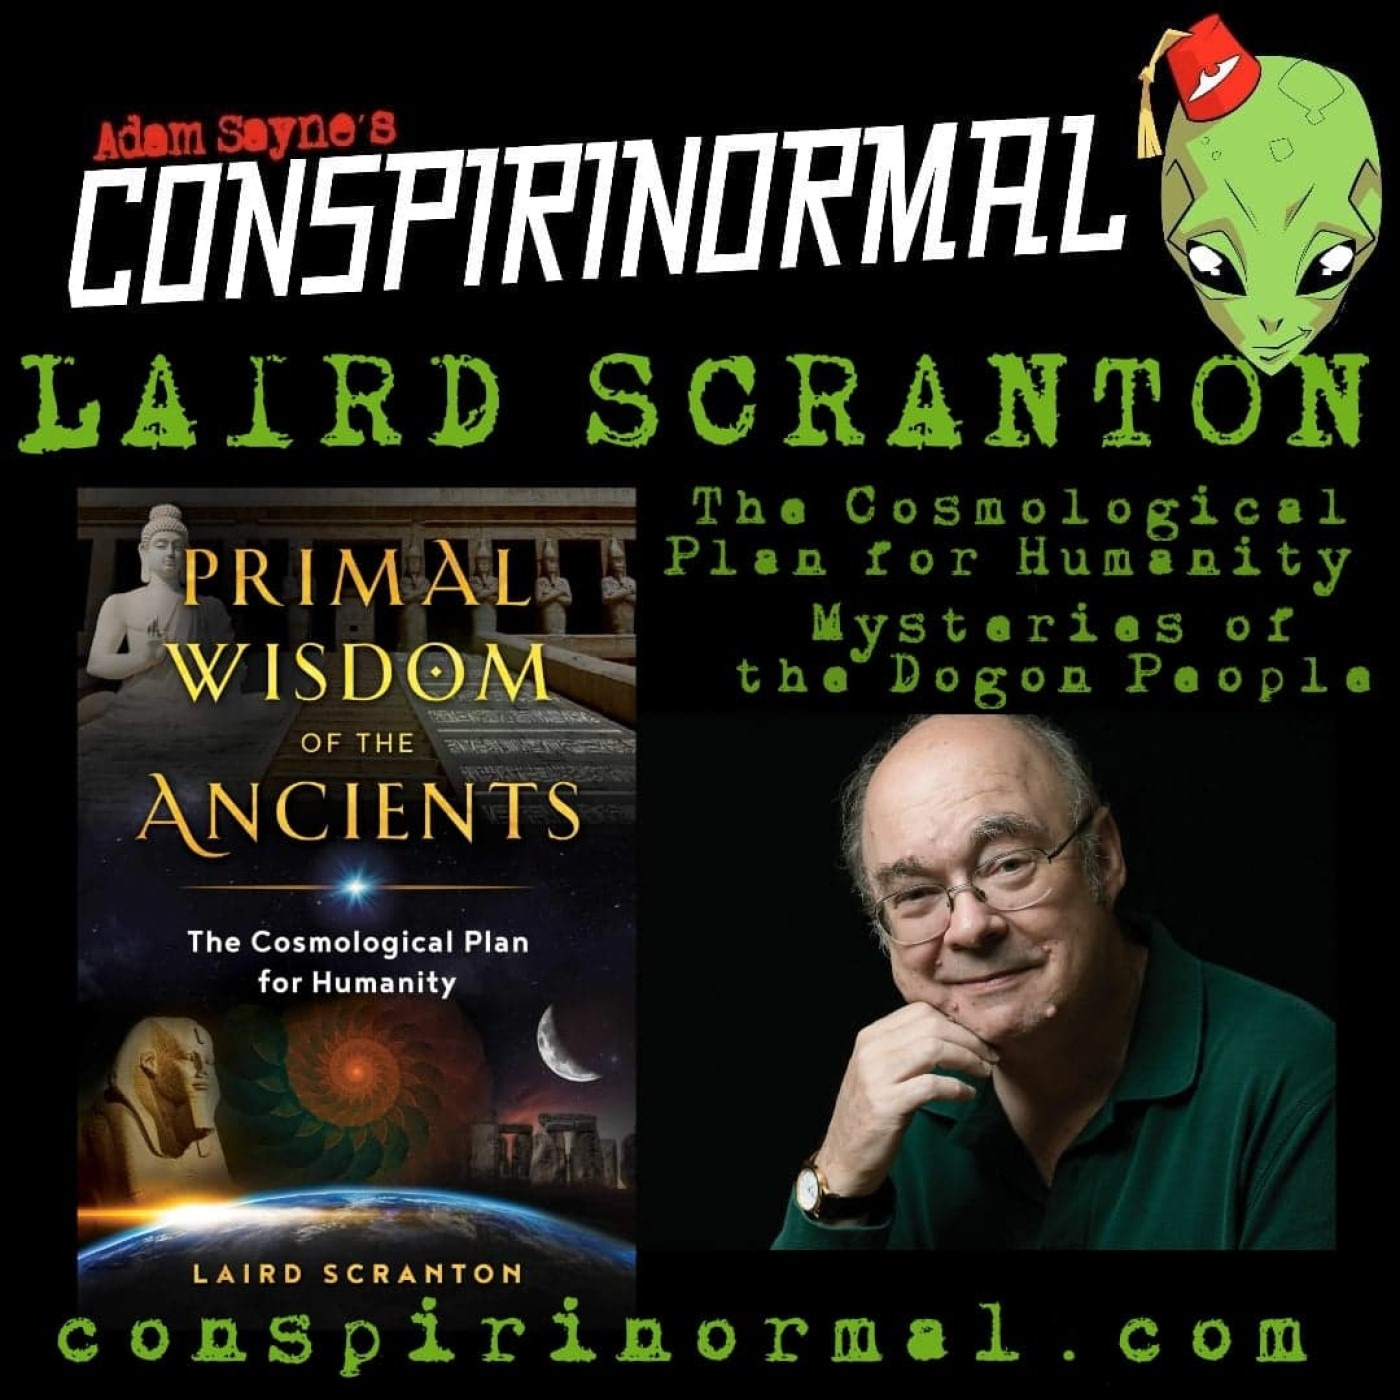 Conspirinormal 343- Laird Scranton (Primal Wisdom of the Ancients)